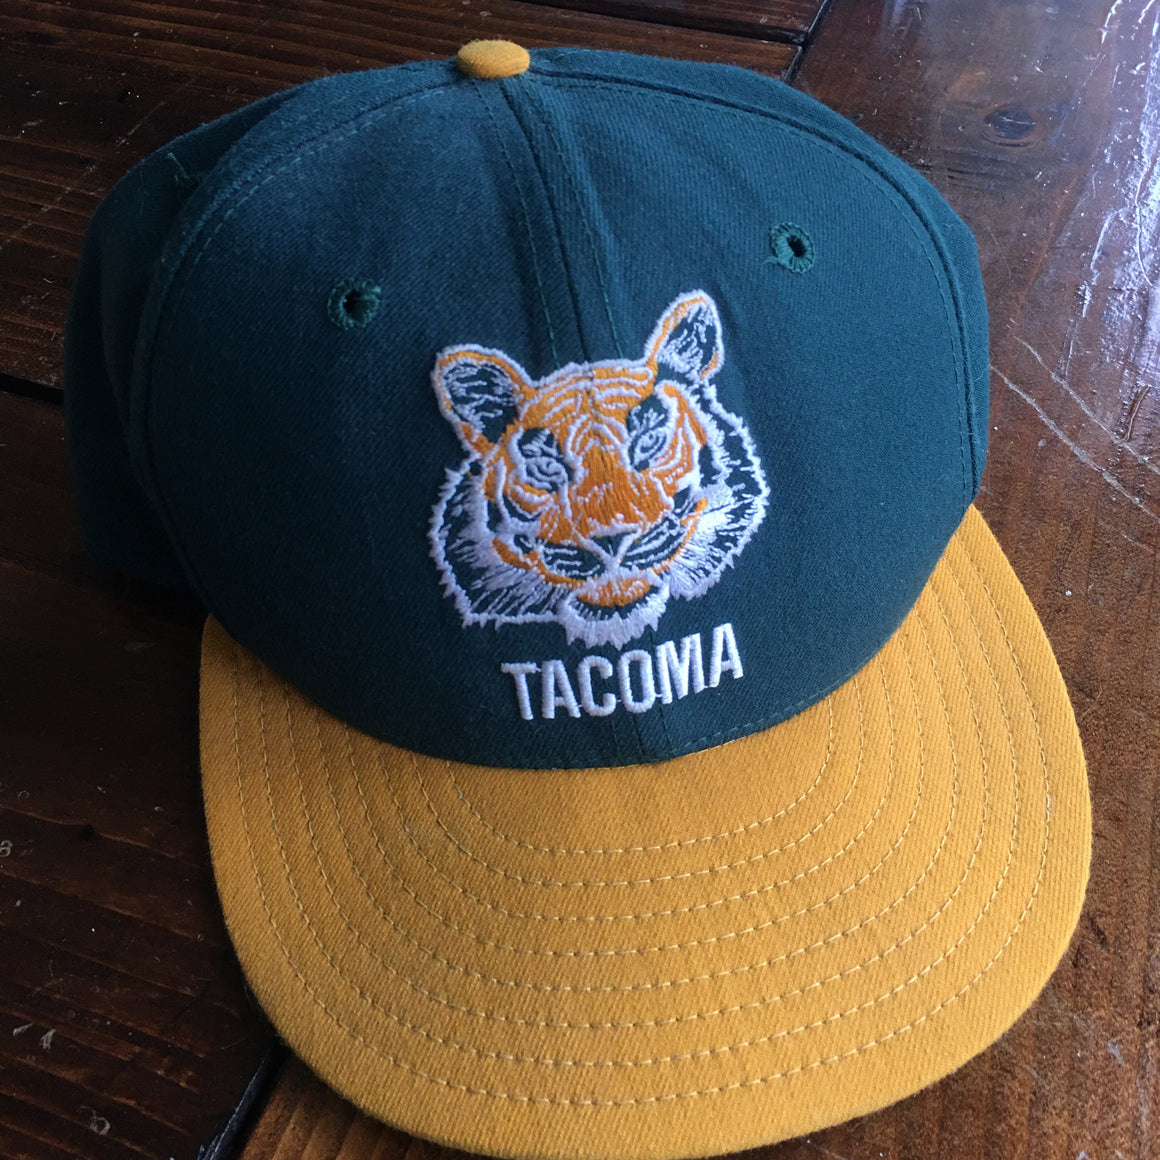 Tacoma Tigers Hat - 7 1/2